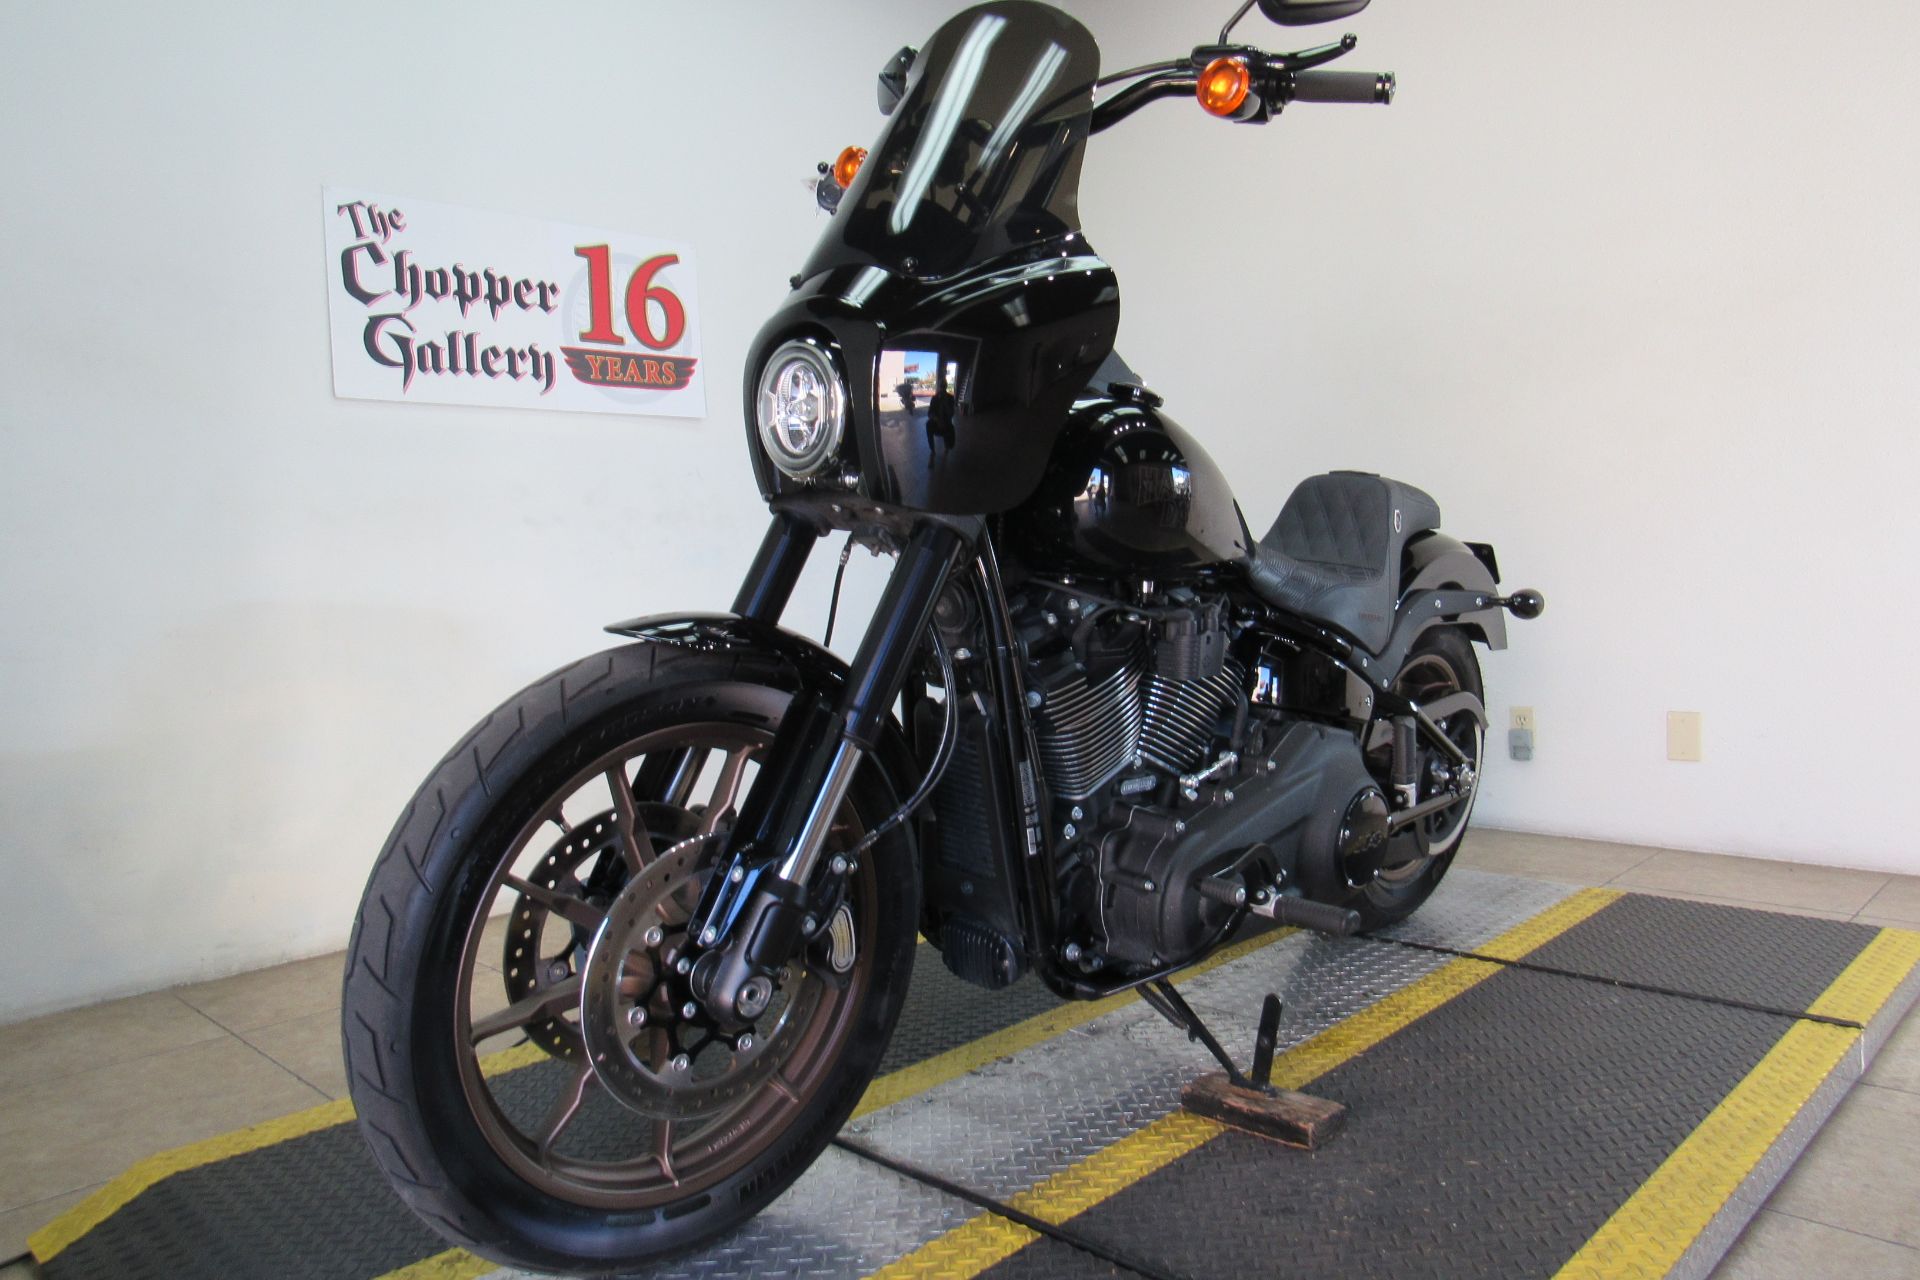 2021 Harley-Davidson Low Rider®S in Temecula, California - Photo 31